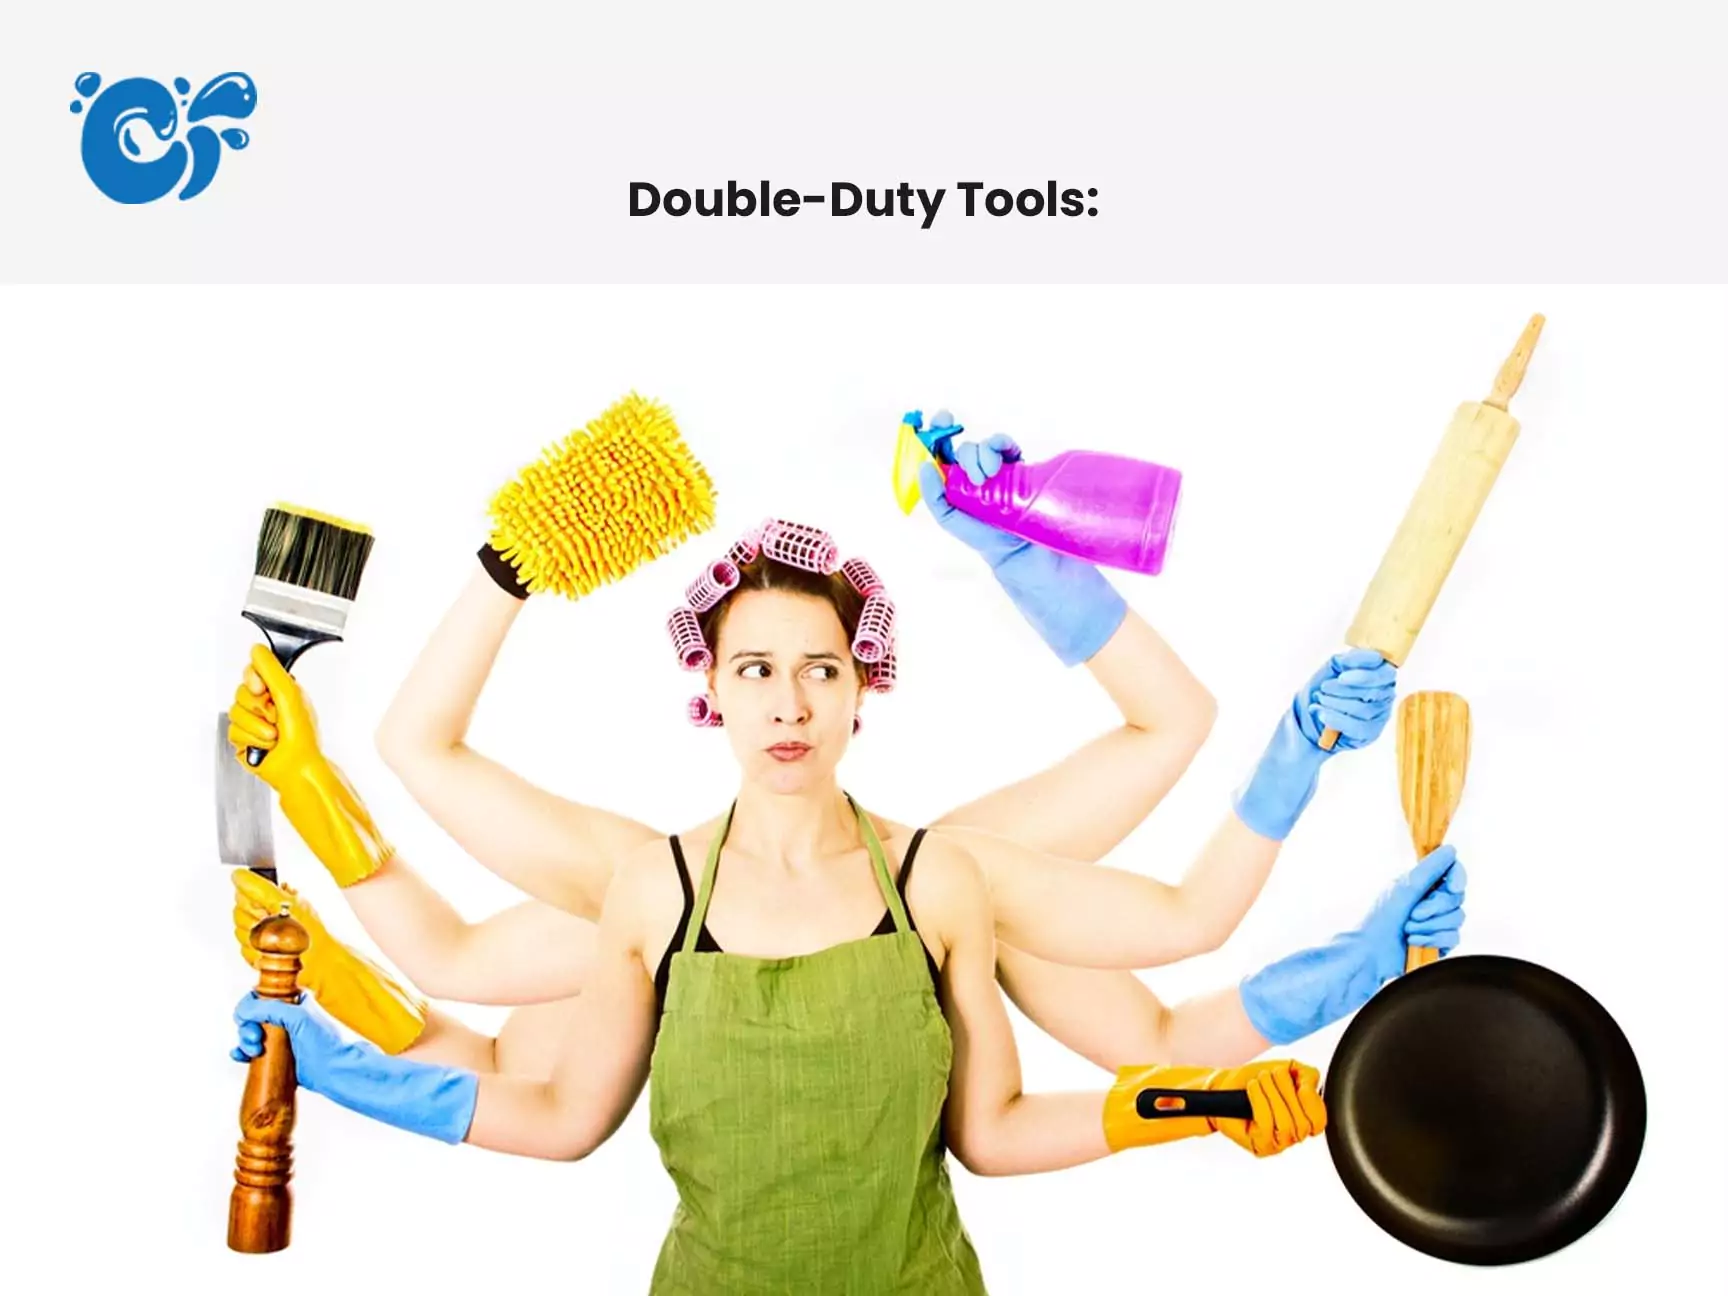 Double-Duty Tools